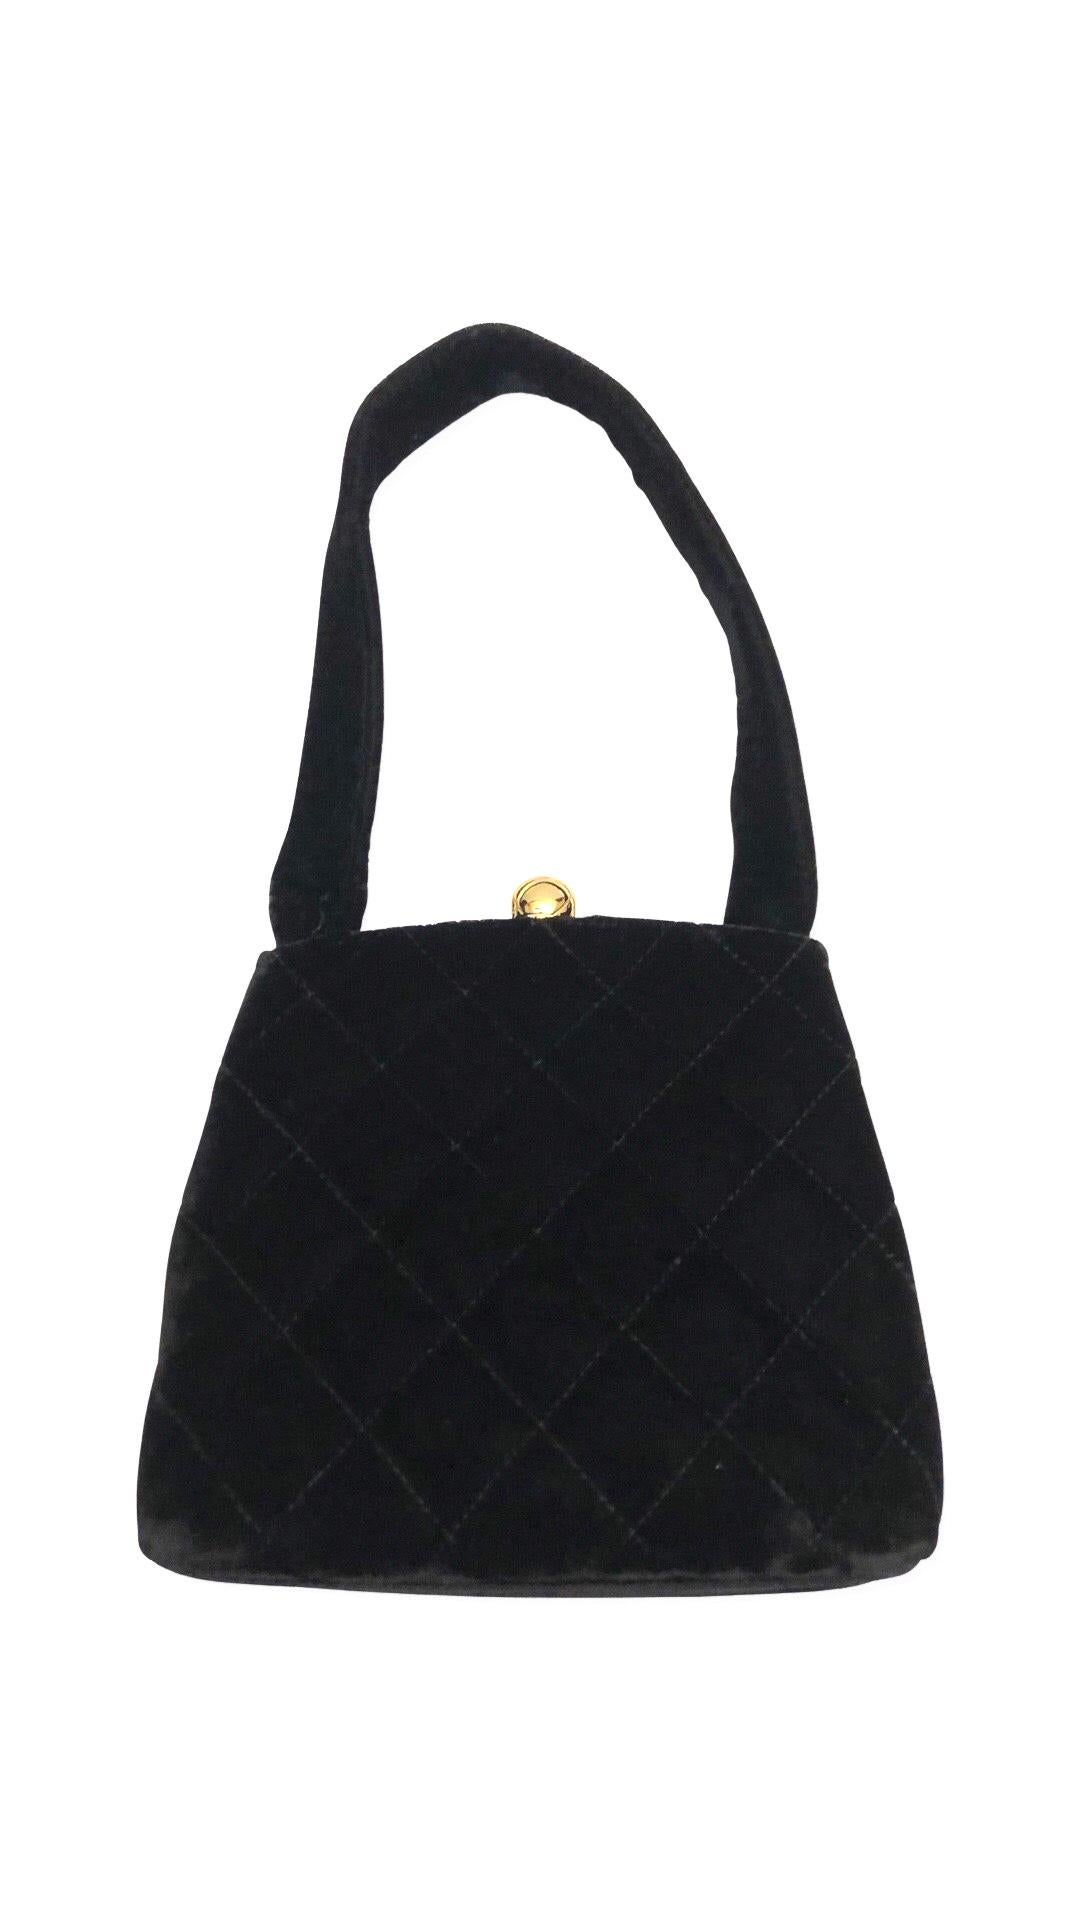 Chanel Black Quilted Velvet Handbag For Sale 1